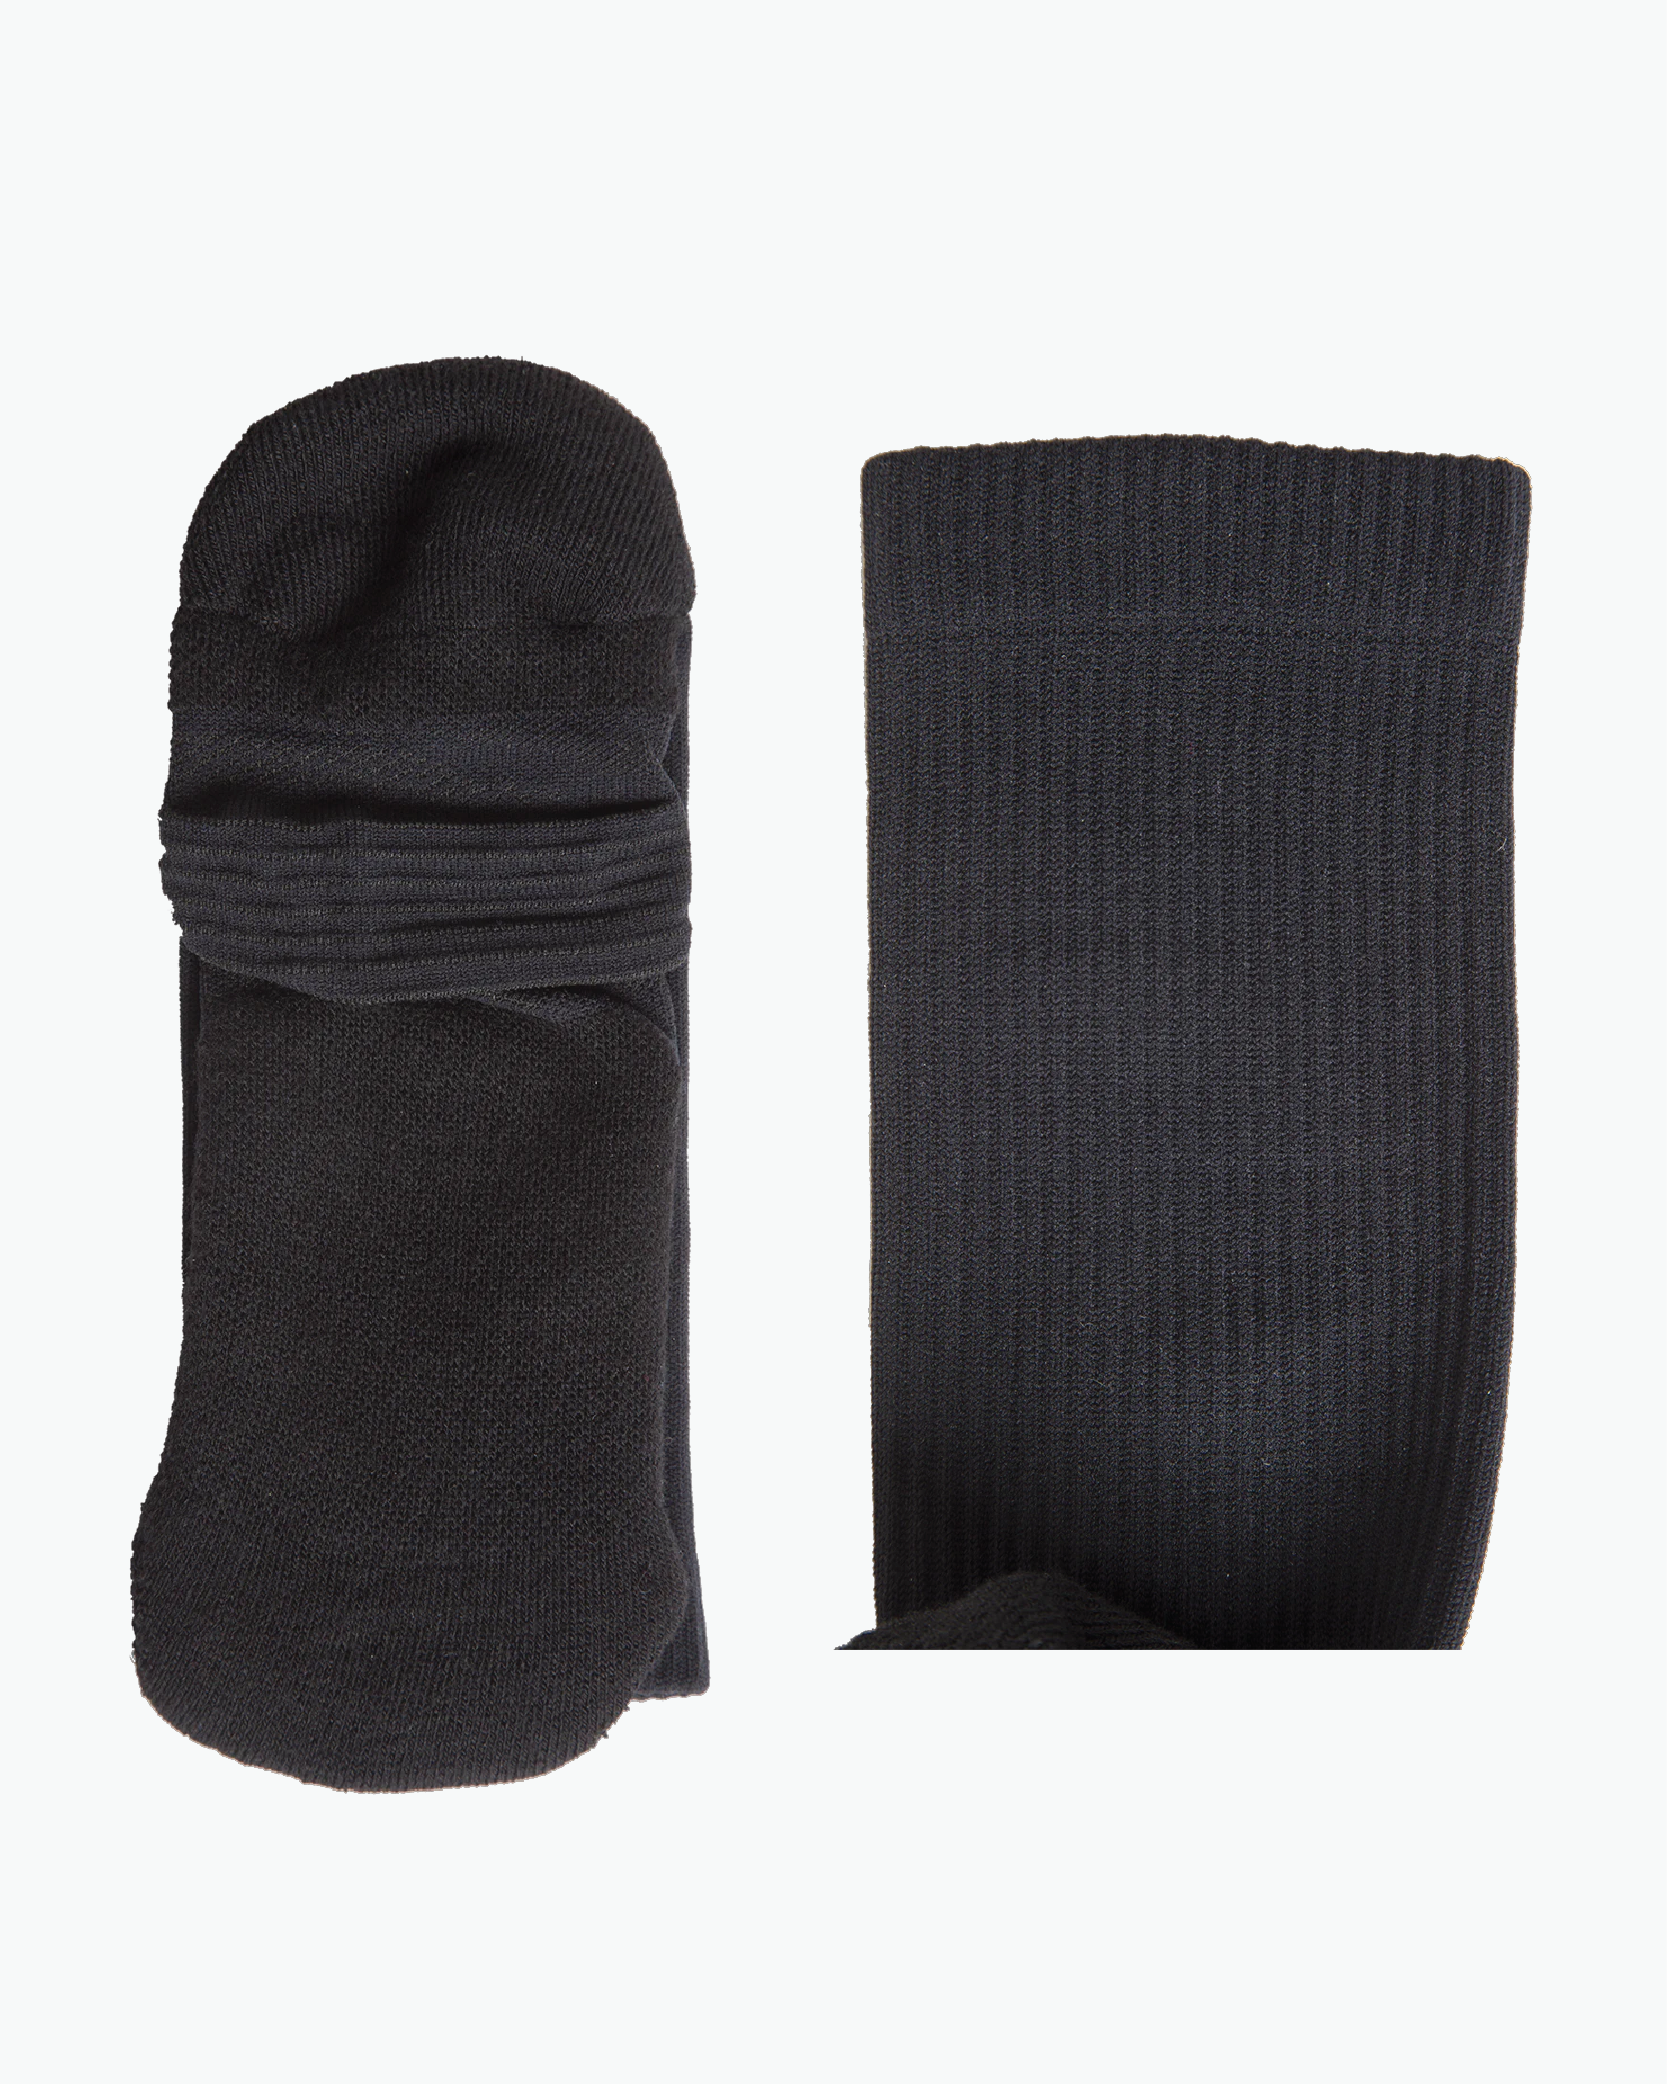 Limitless Professional Black Socks